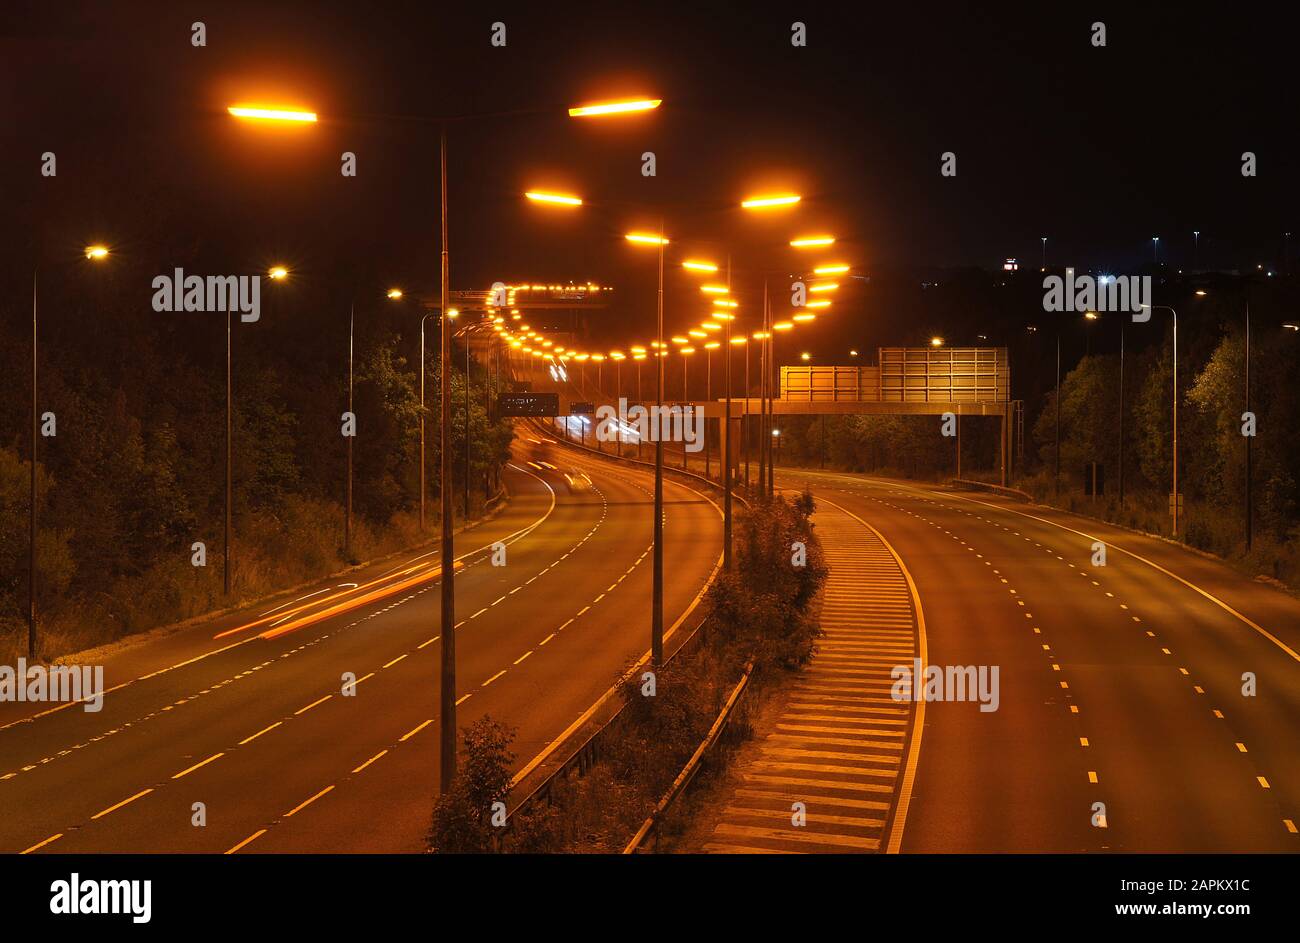 Sodium street lights photography and - Alamy